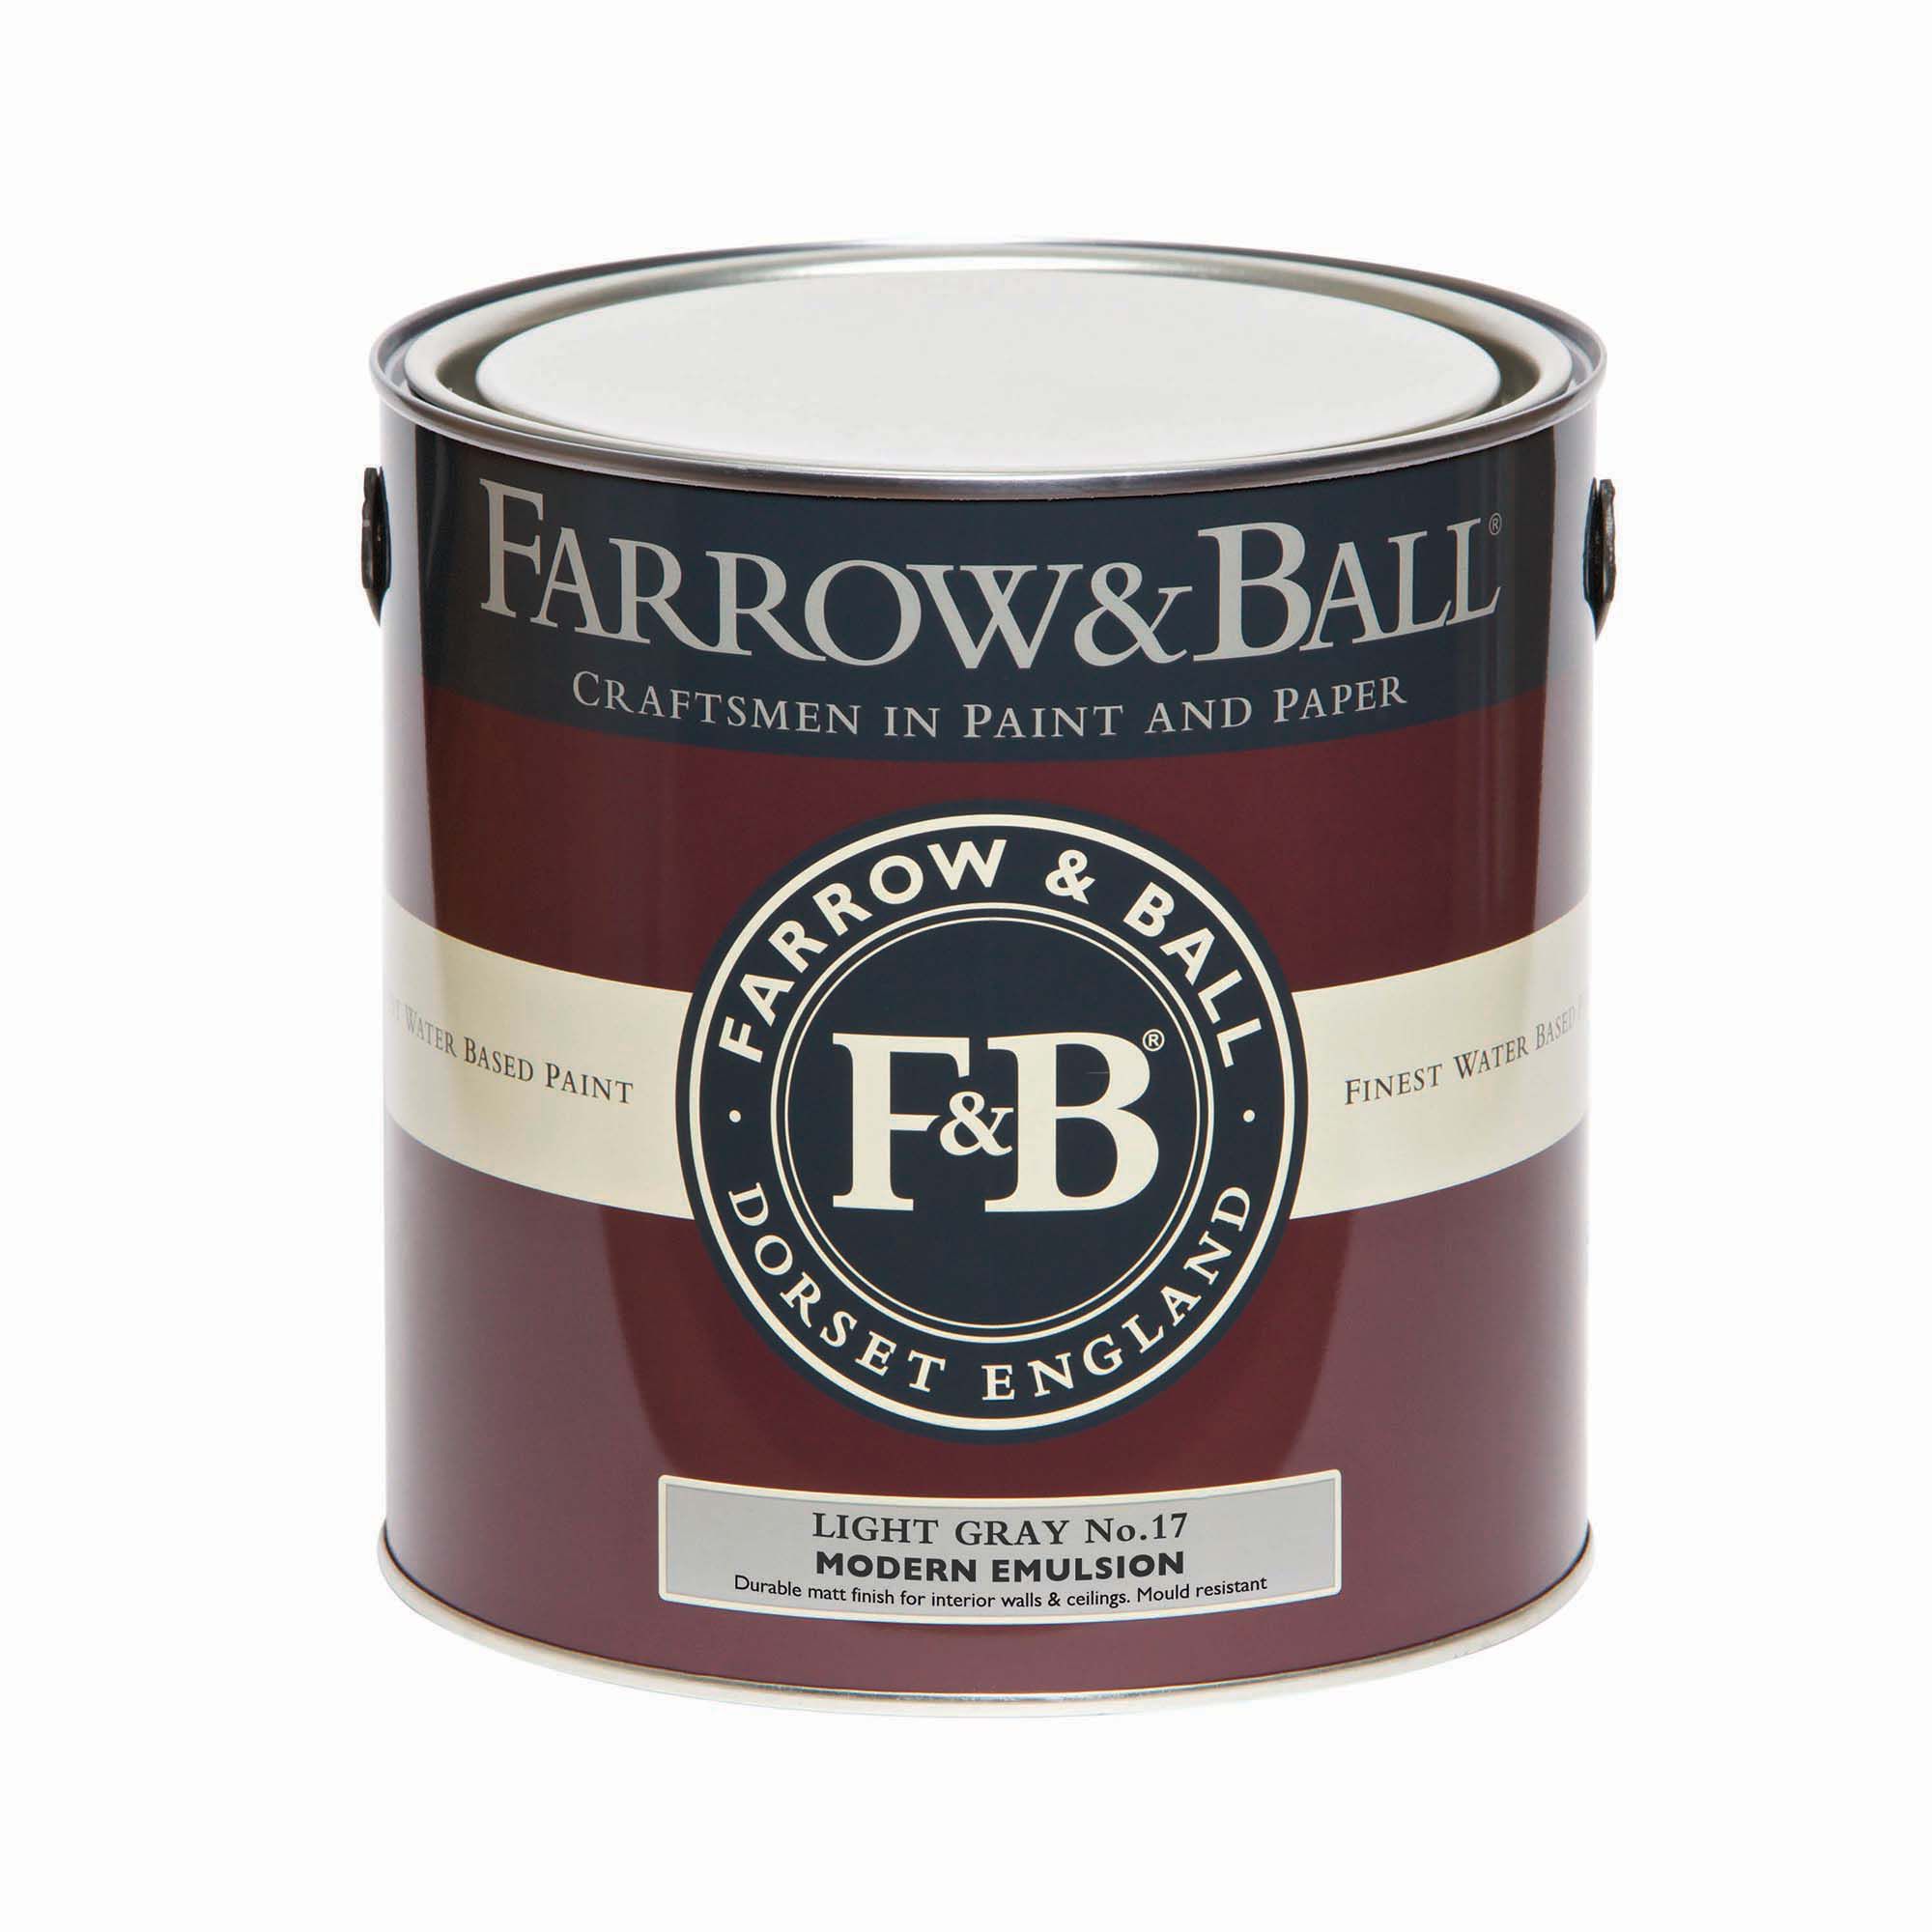 Farrow & Ball Modern Light Gray No.17 Matt Emulsion paint, 2.5L